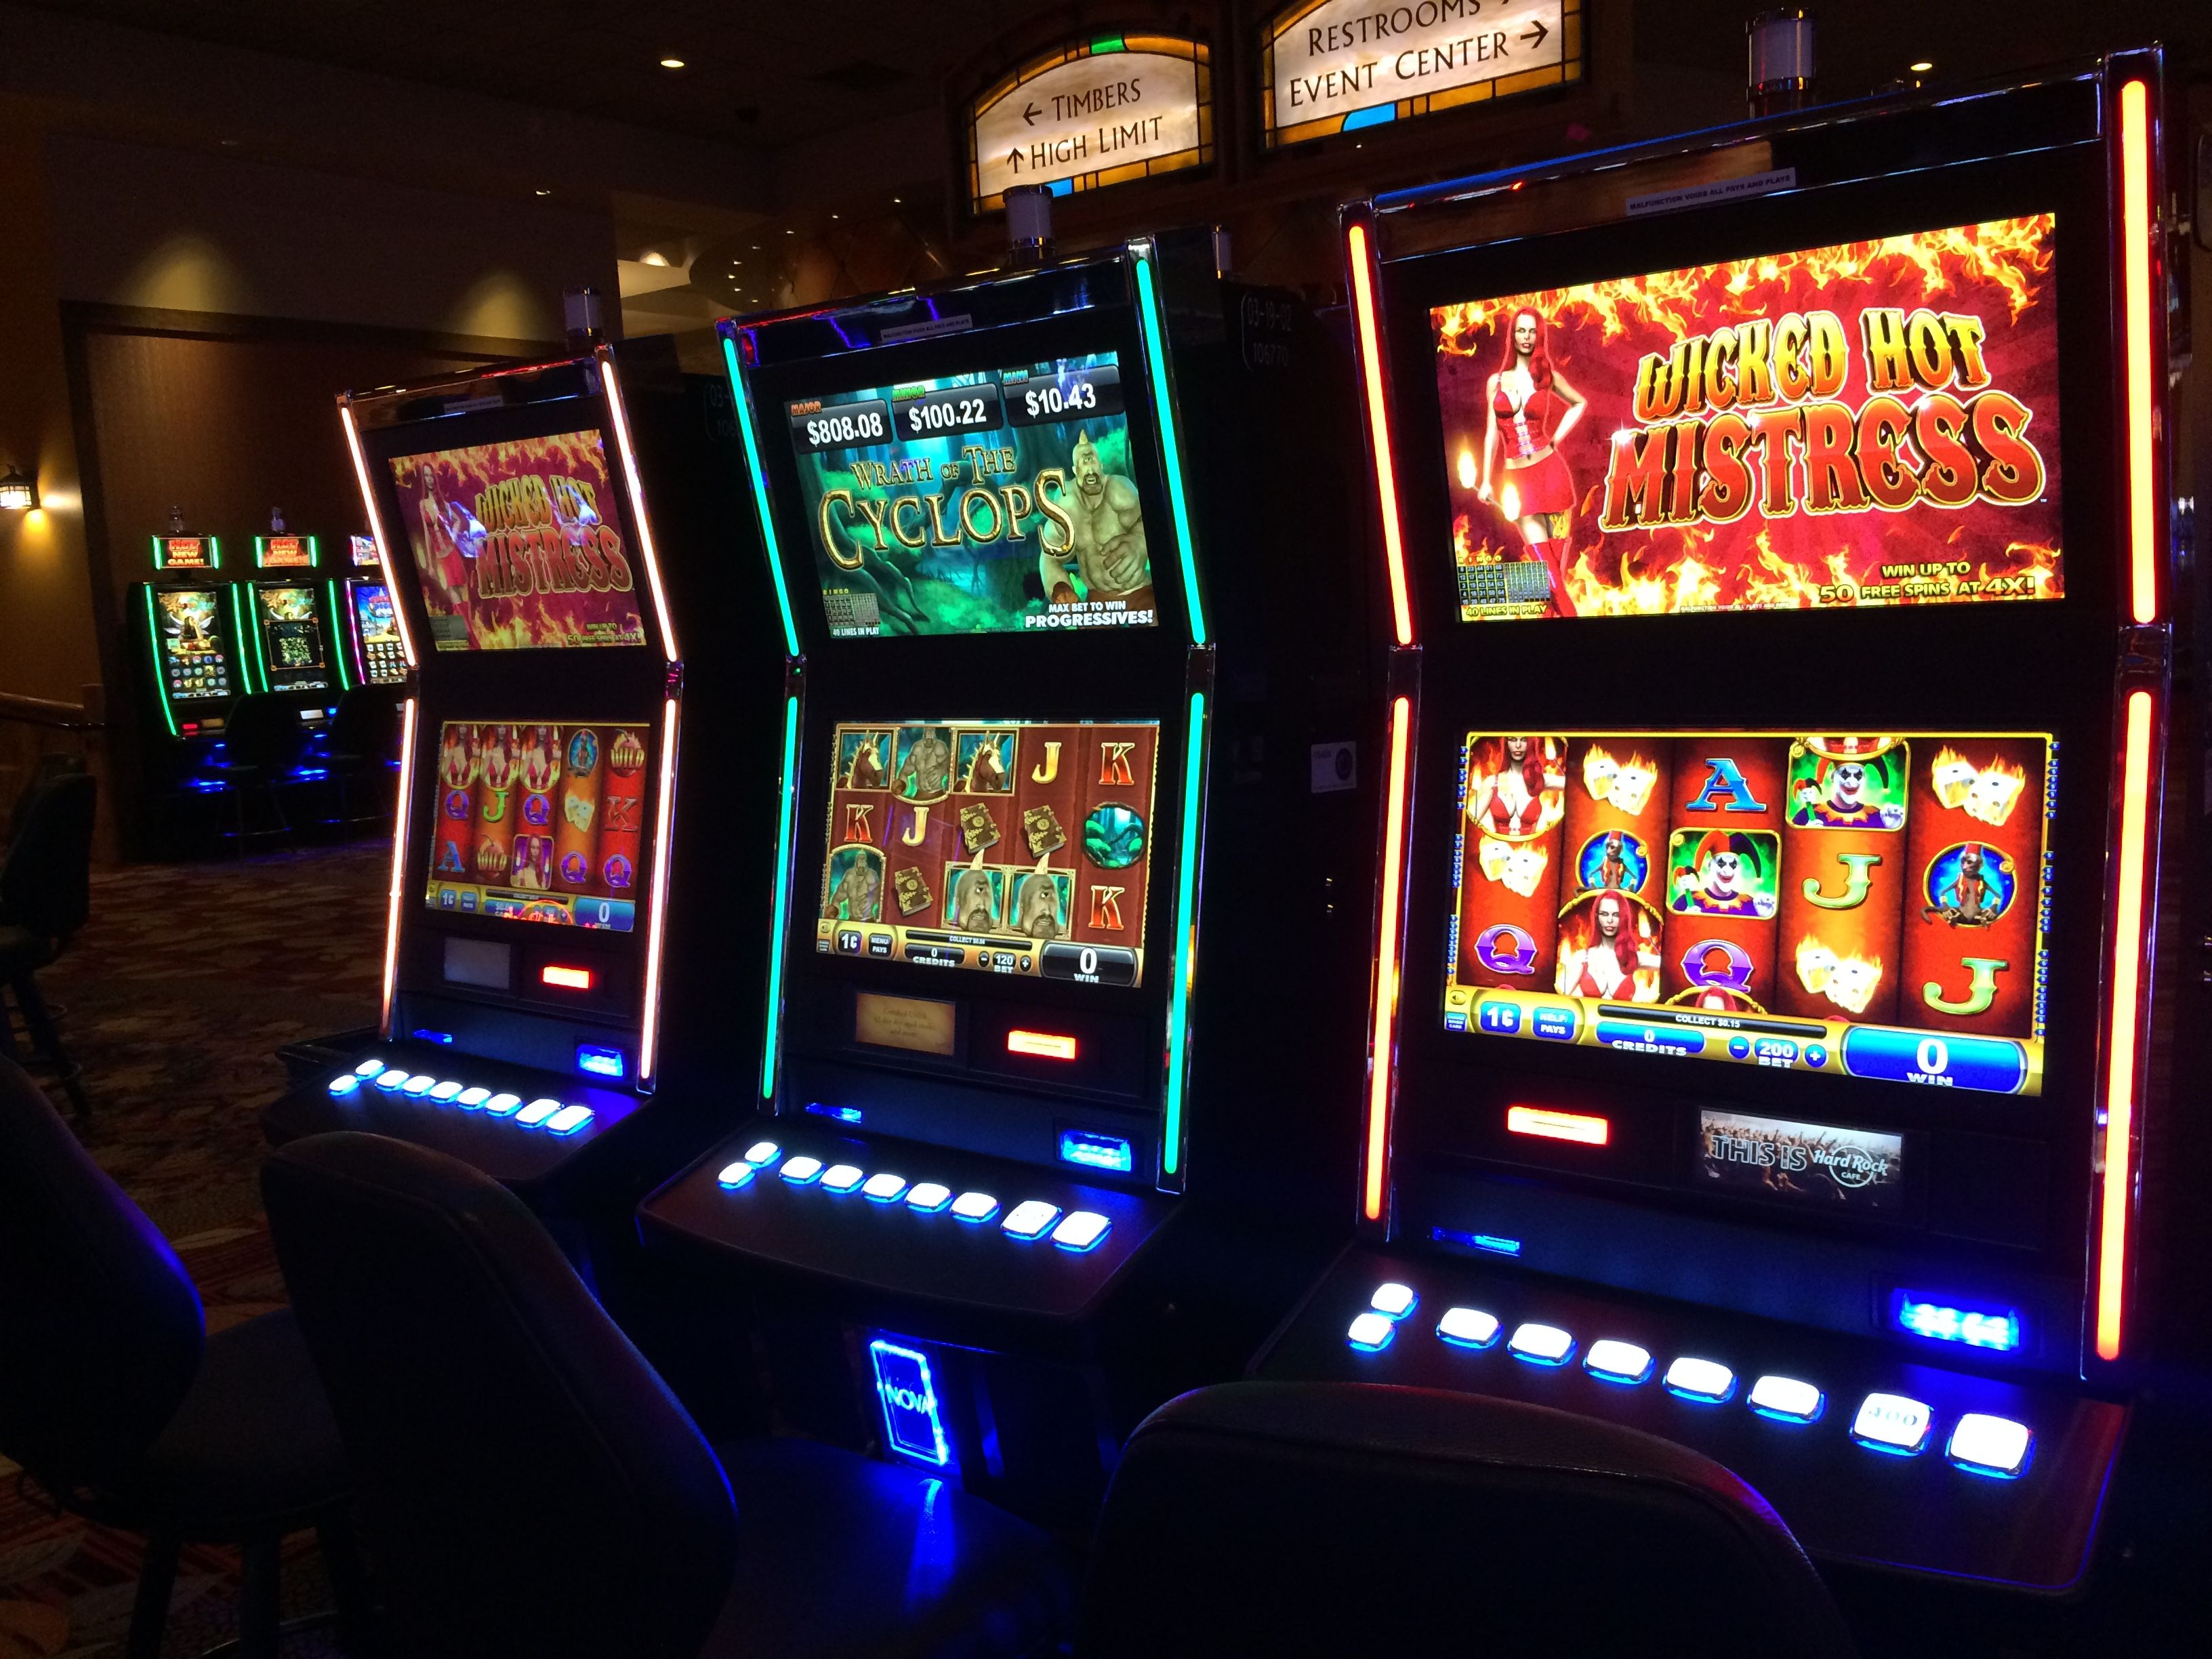 Outback jack slot machine online casino